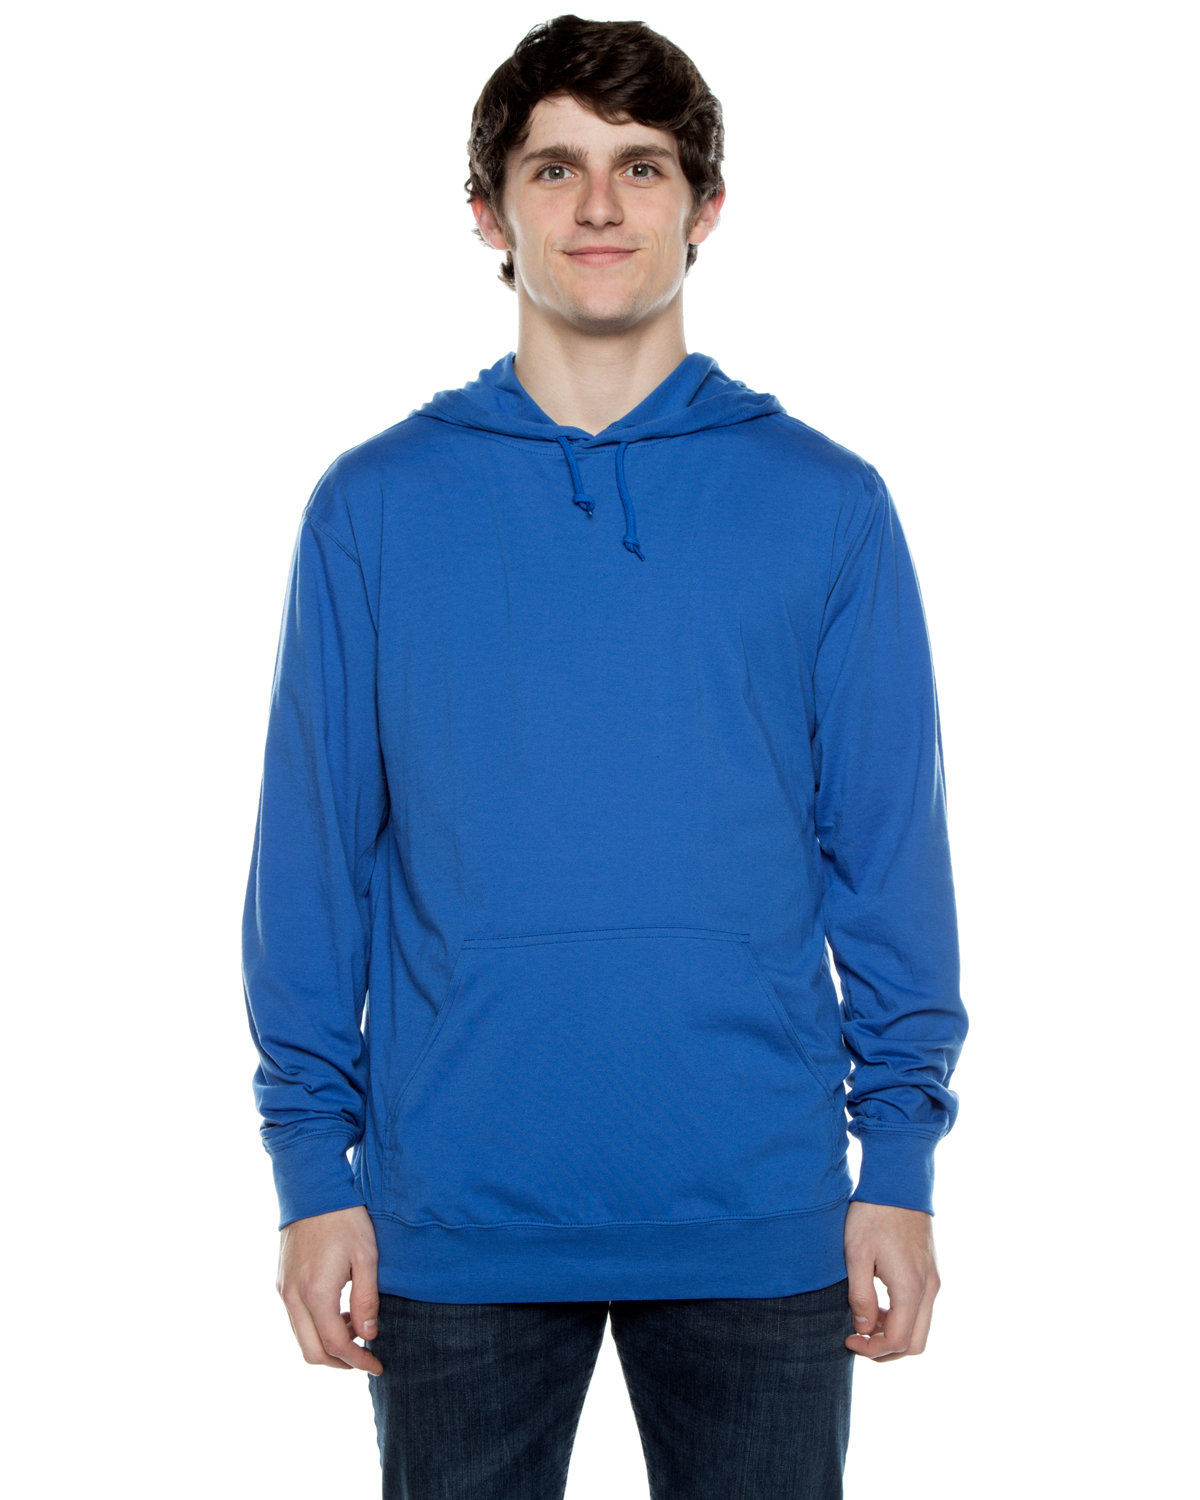 Beimar Drop Ship Unisex 4.5 oz. Long-Sleeve Jersey Hooded T-Shirt ROYAL 